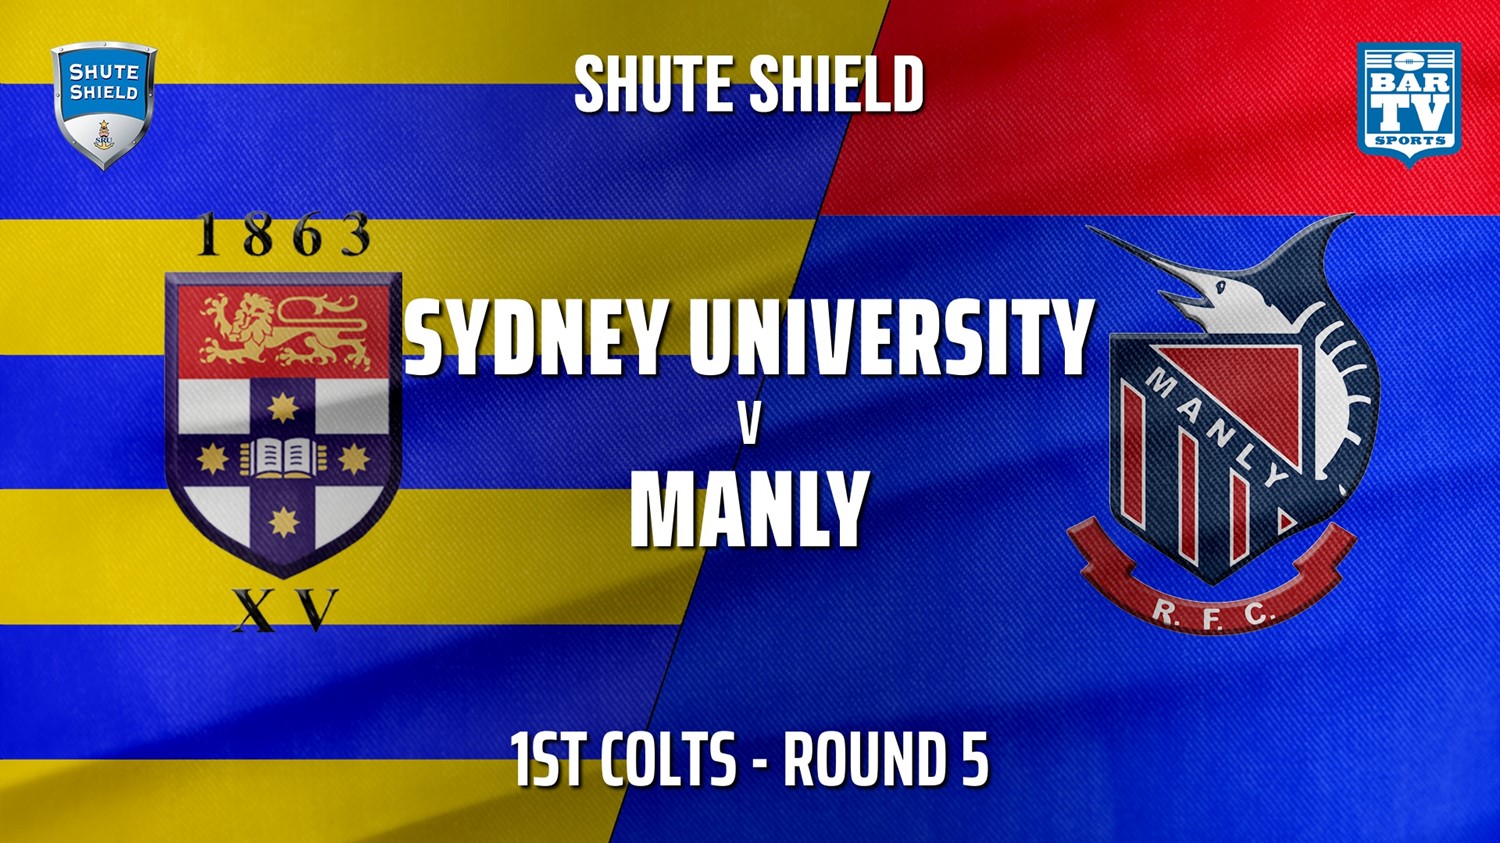 210508-Shute Shield Round 5 - 1st Colts - Sydney University v Manly Minigame Slate Image